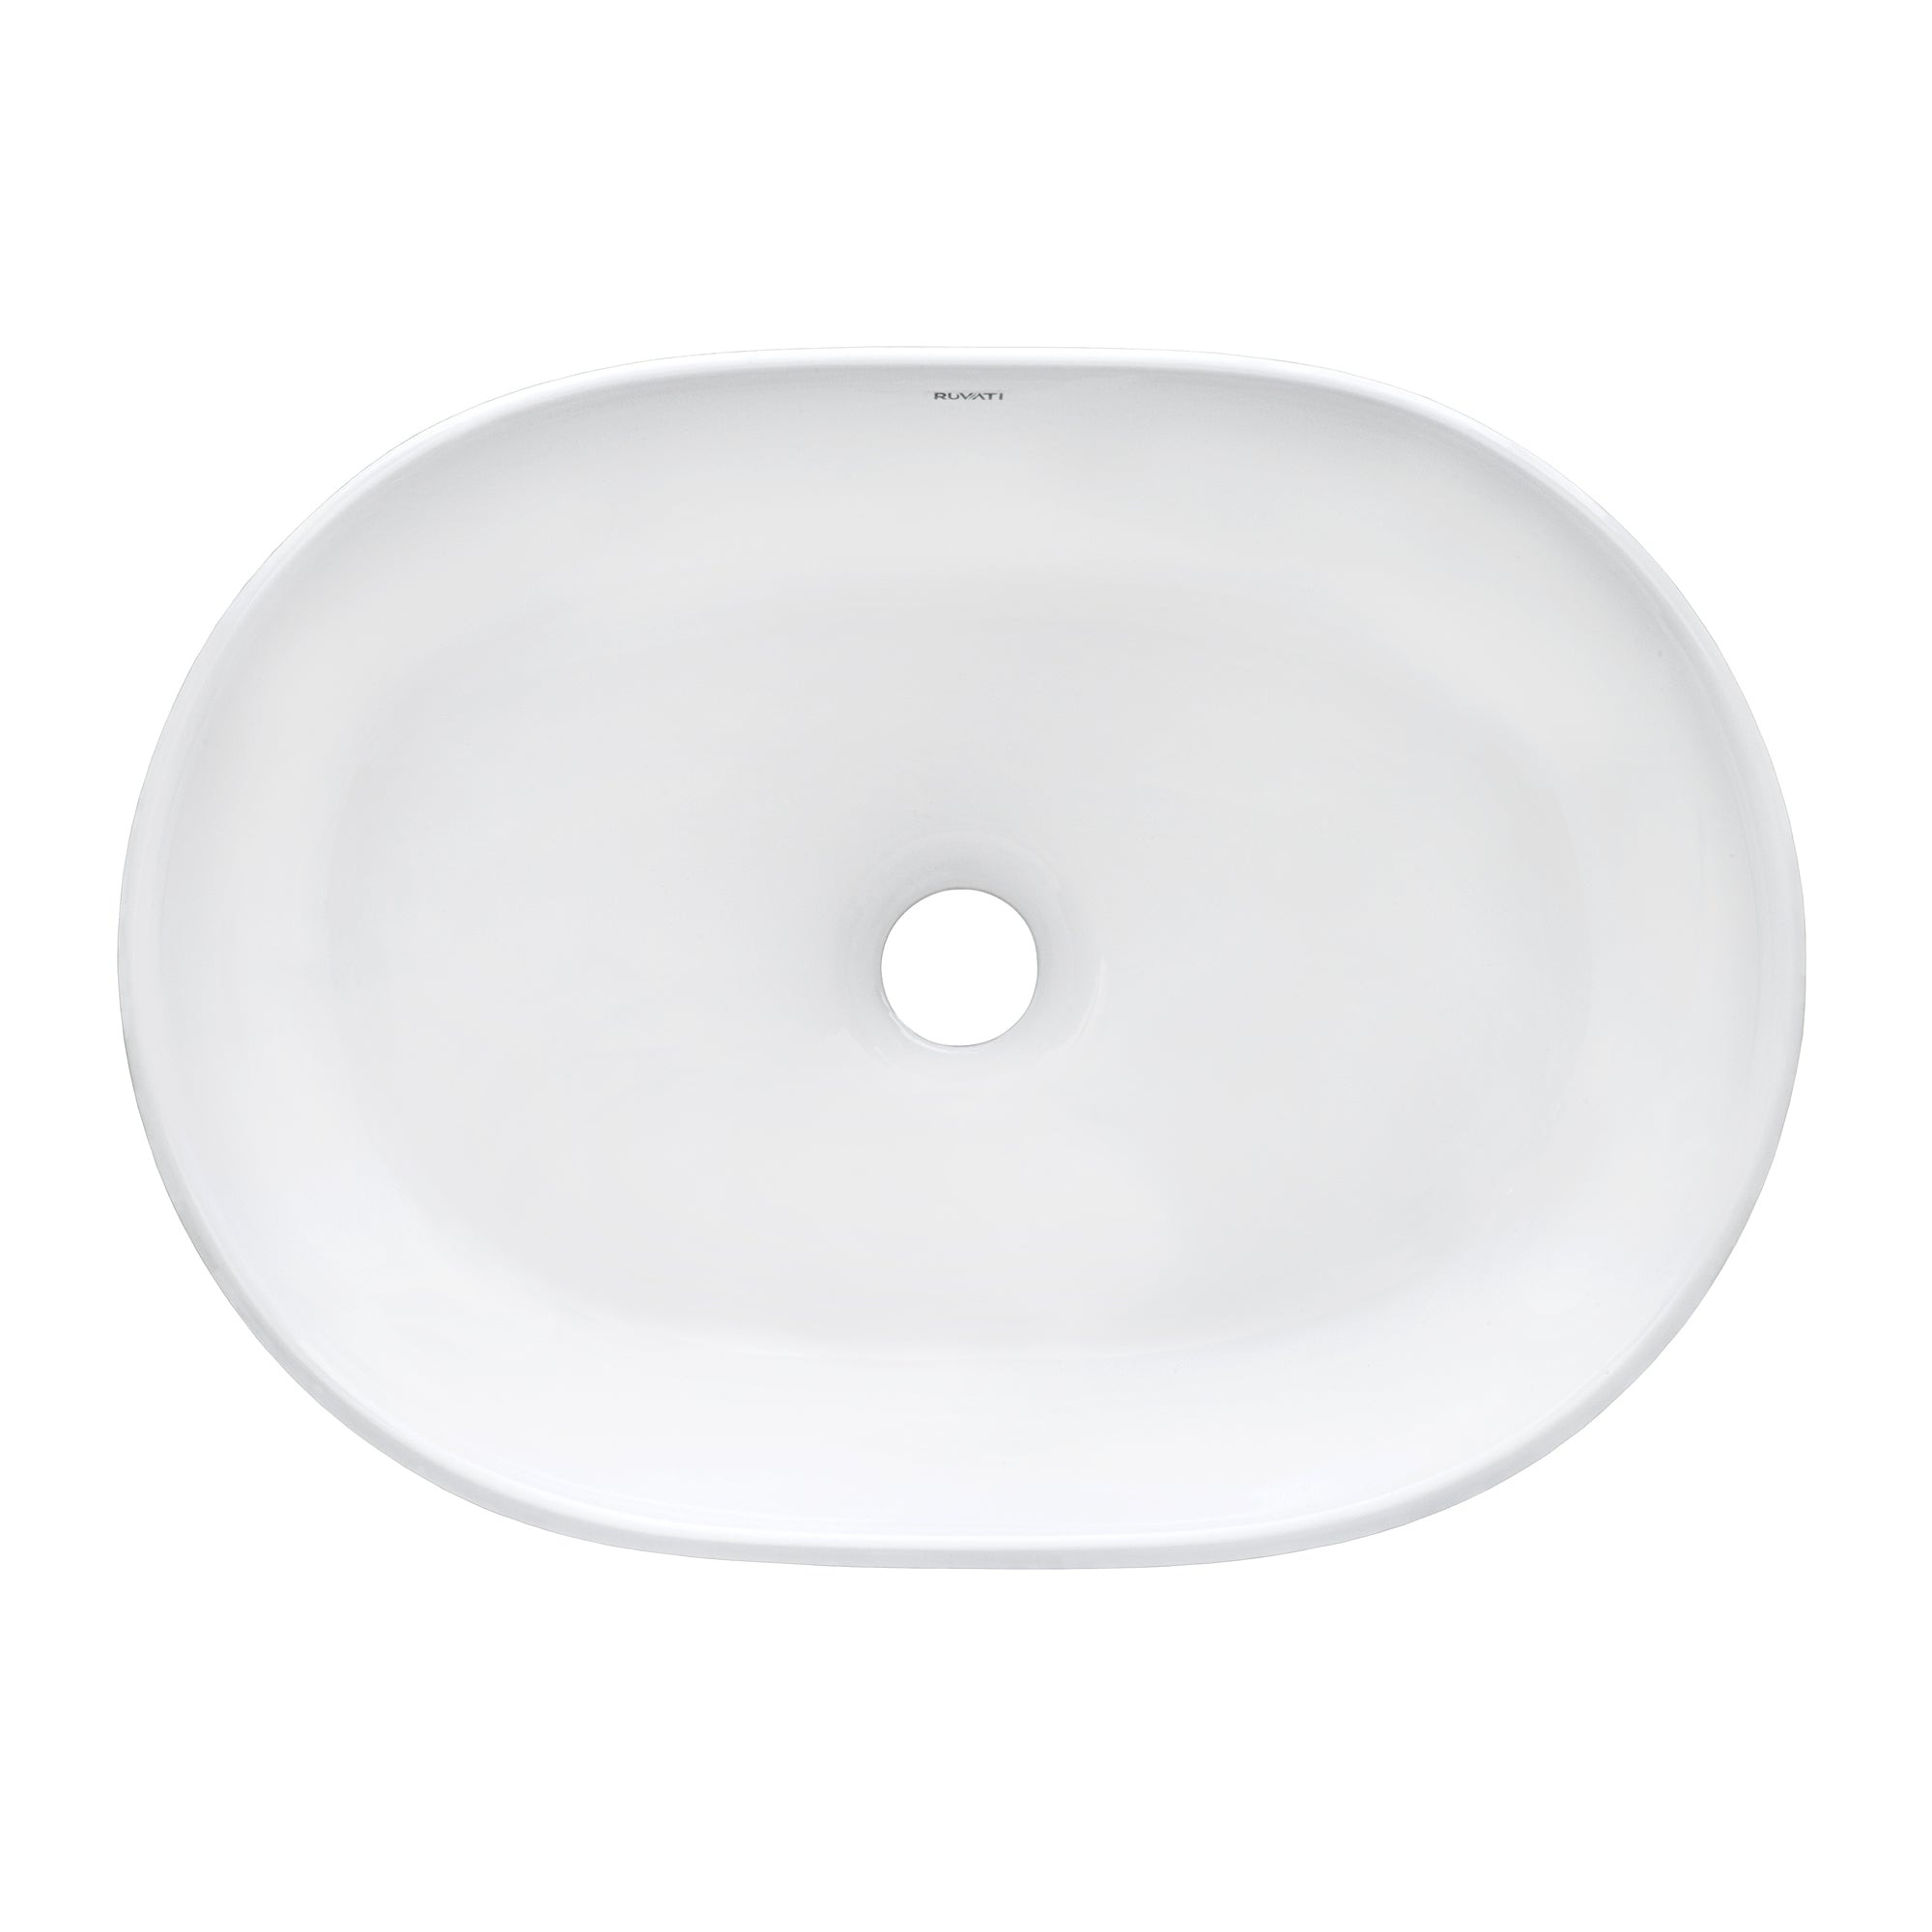 Ruvati 24" x 16" Oval Bathroom Vessel Sink in White